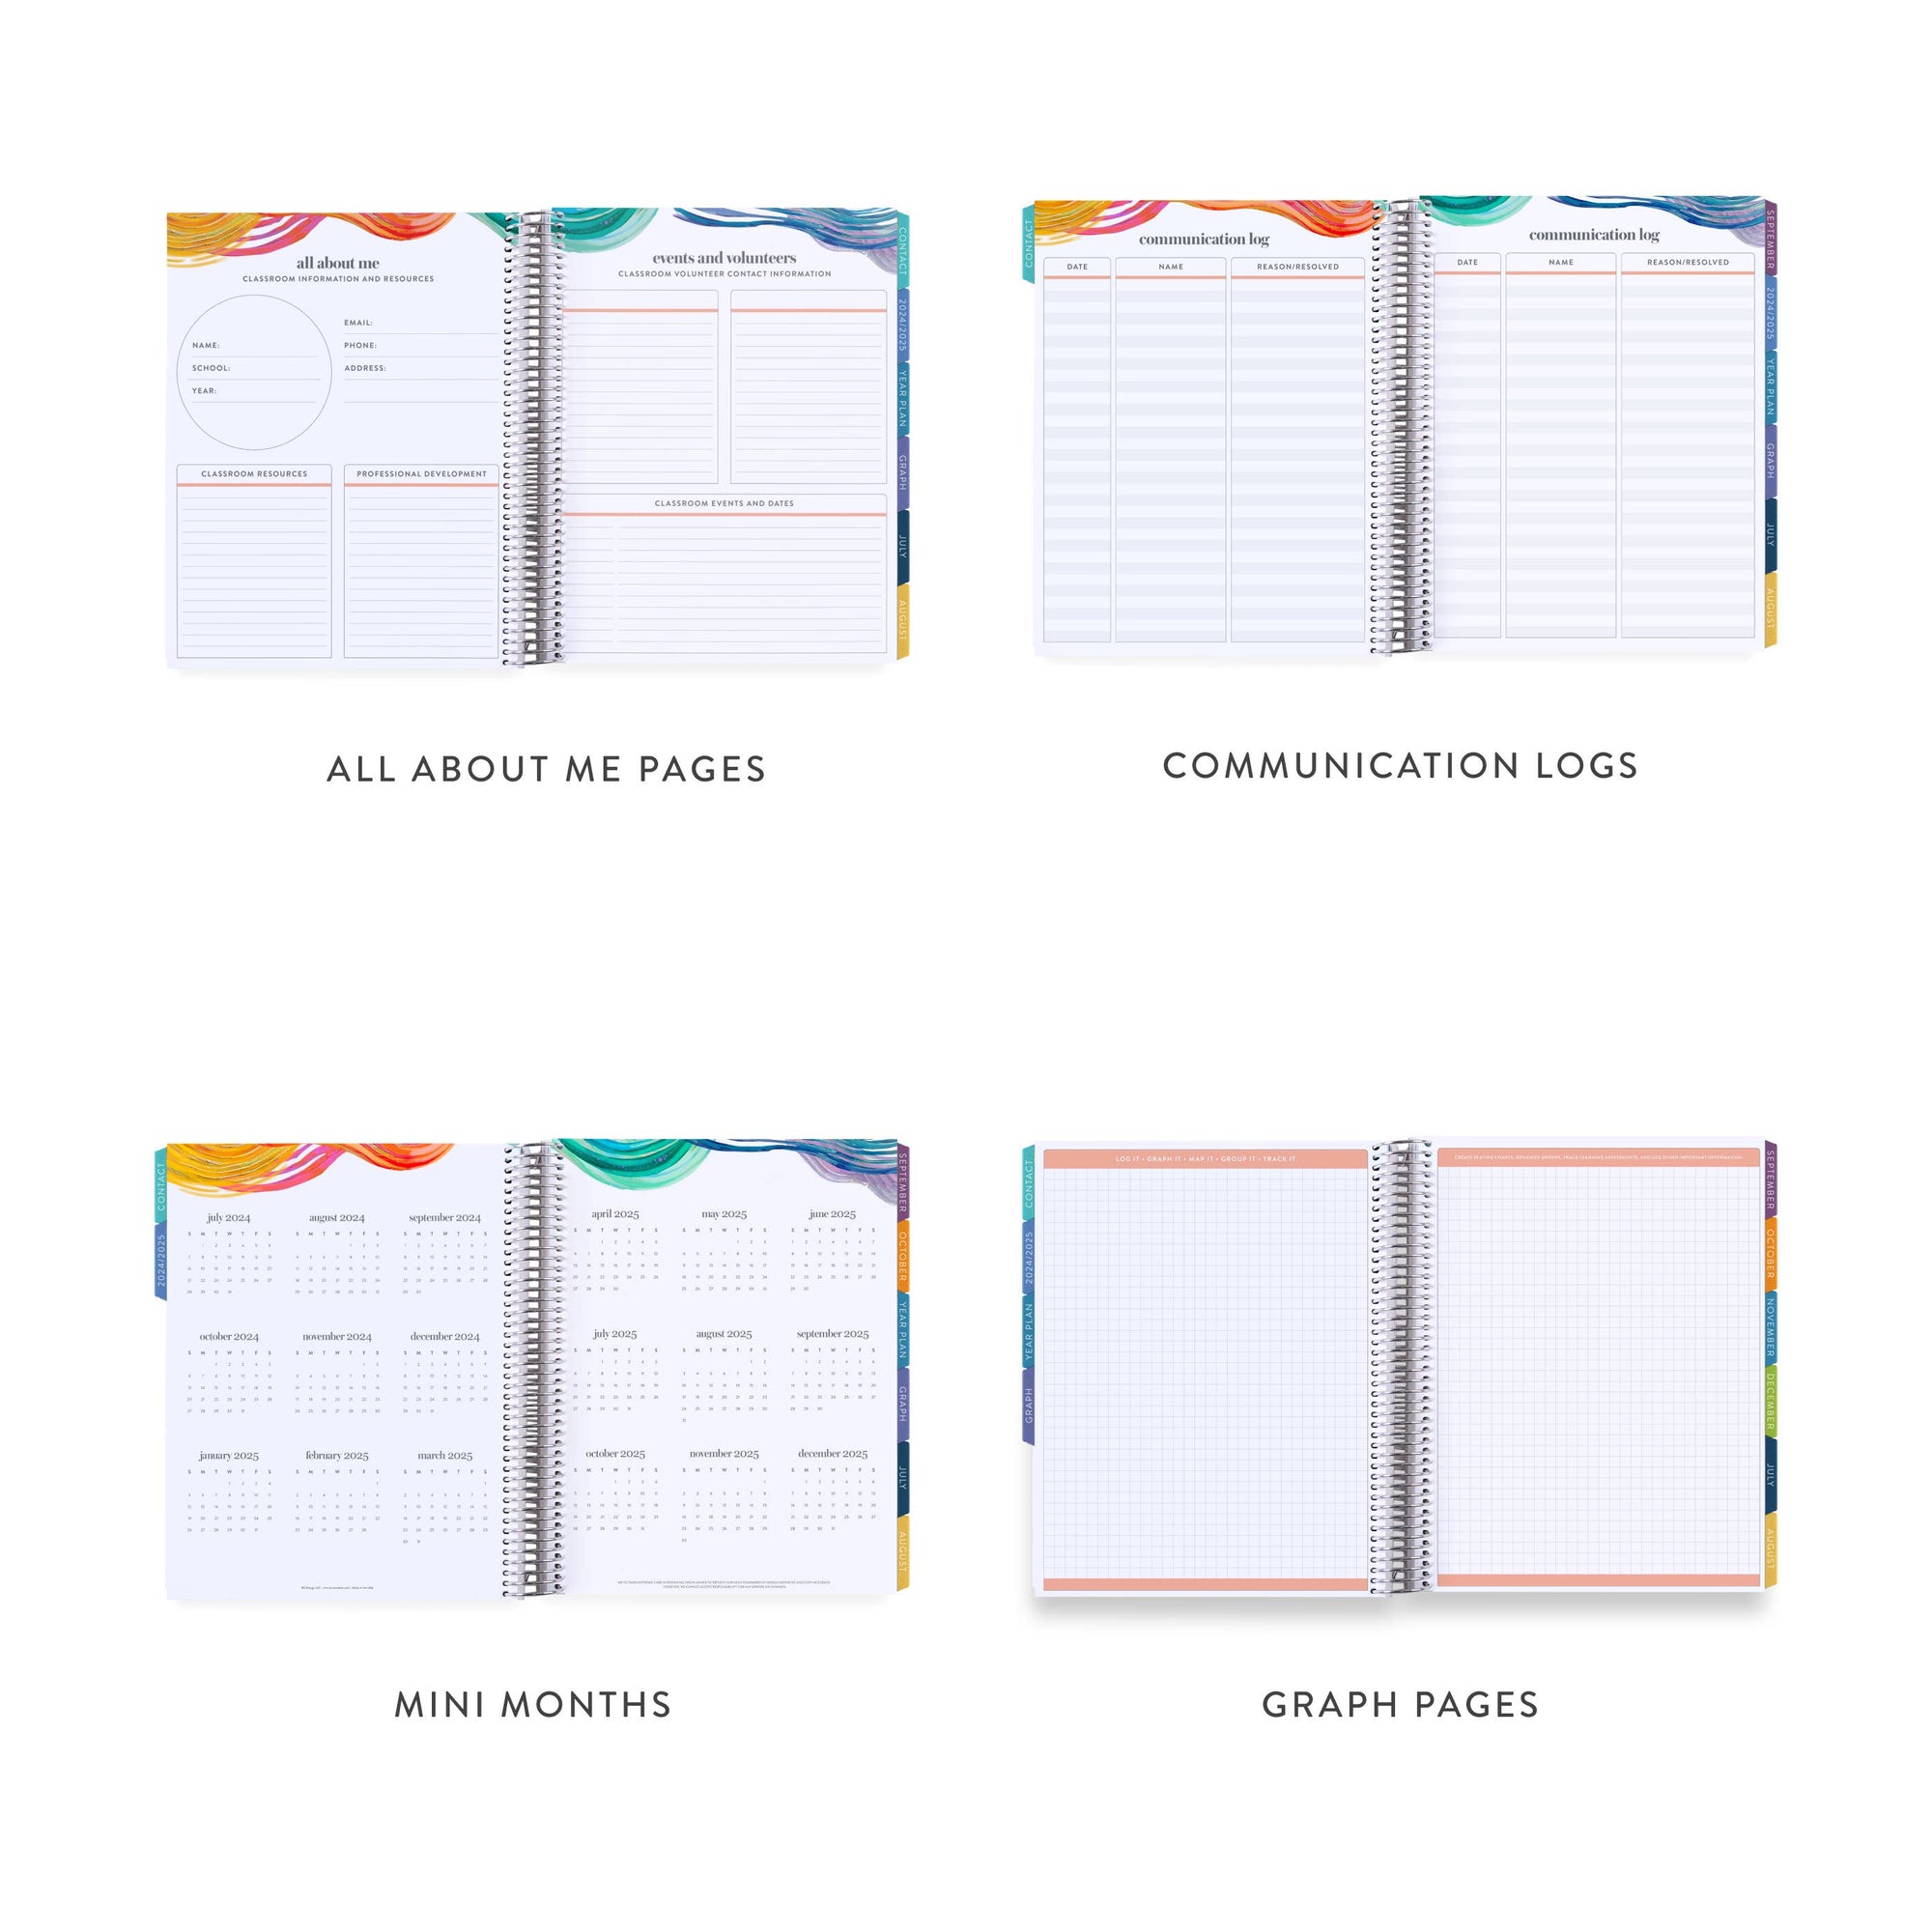 Coiled Teacher Lesson Planner - Motivation Notes design